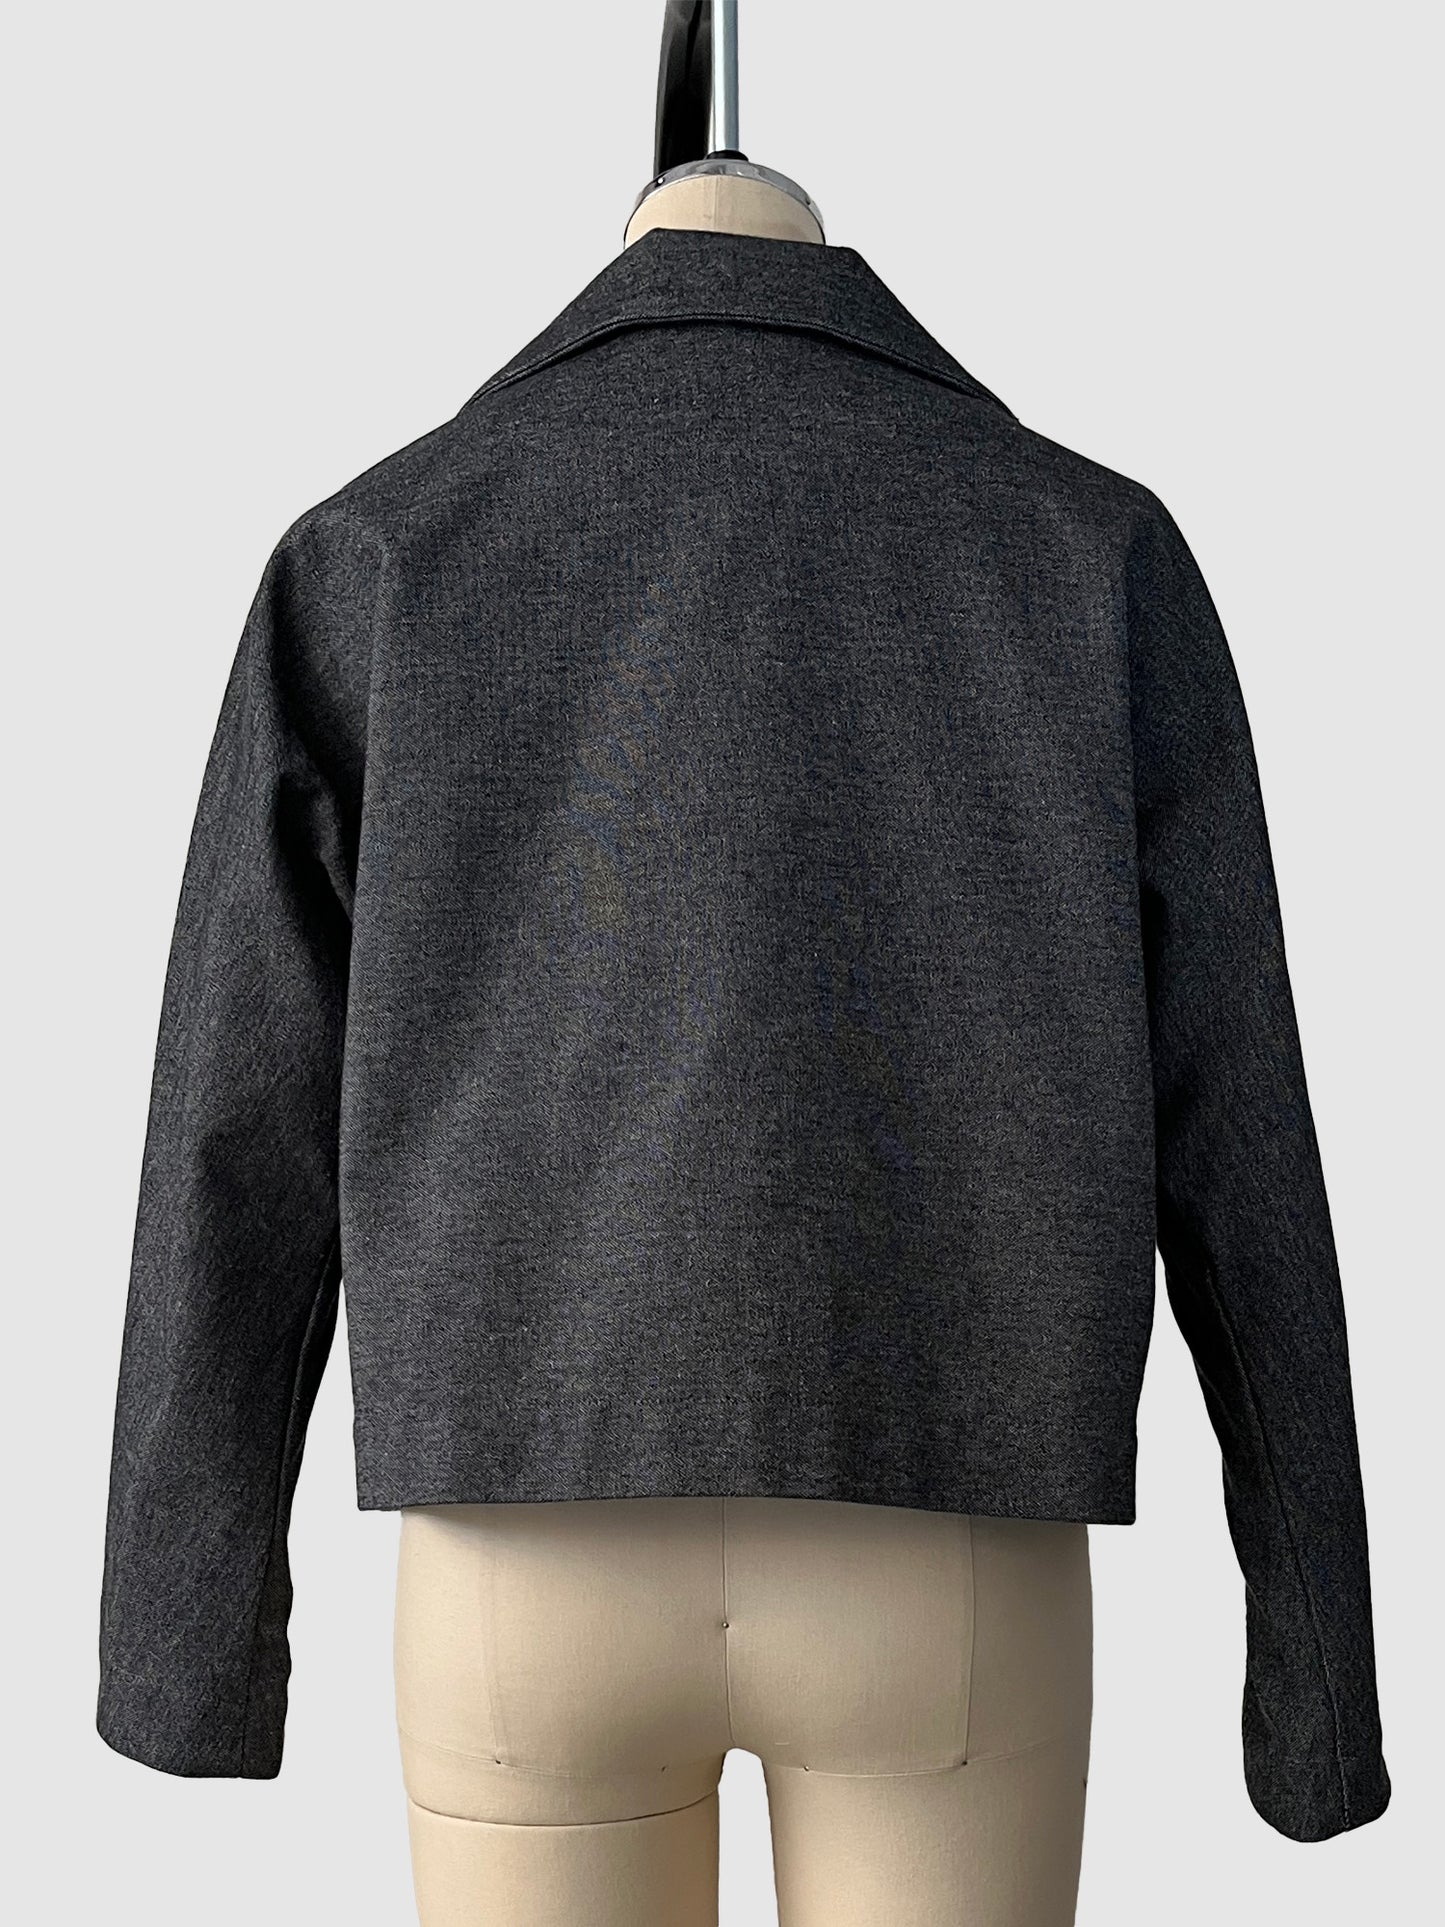 Hashigo jacket / Gray